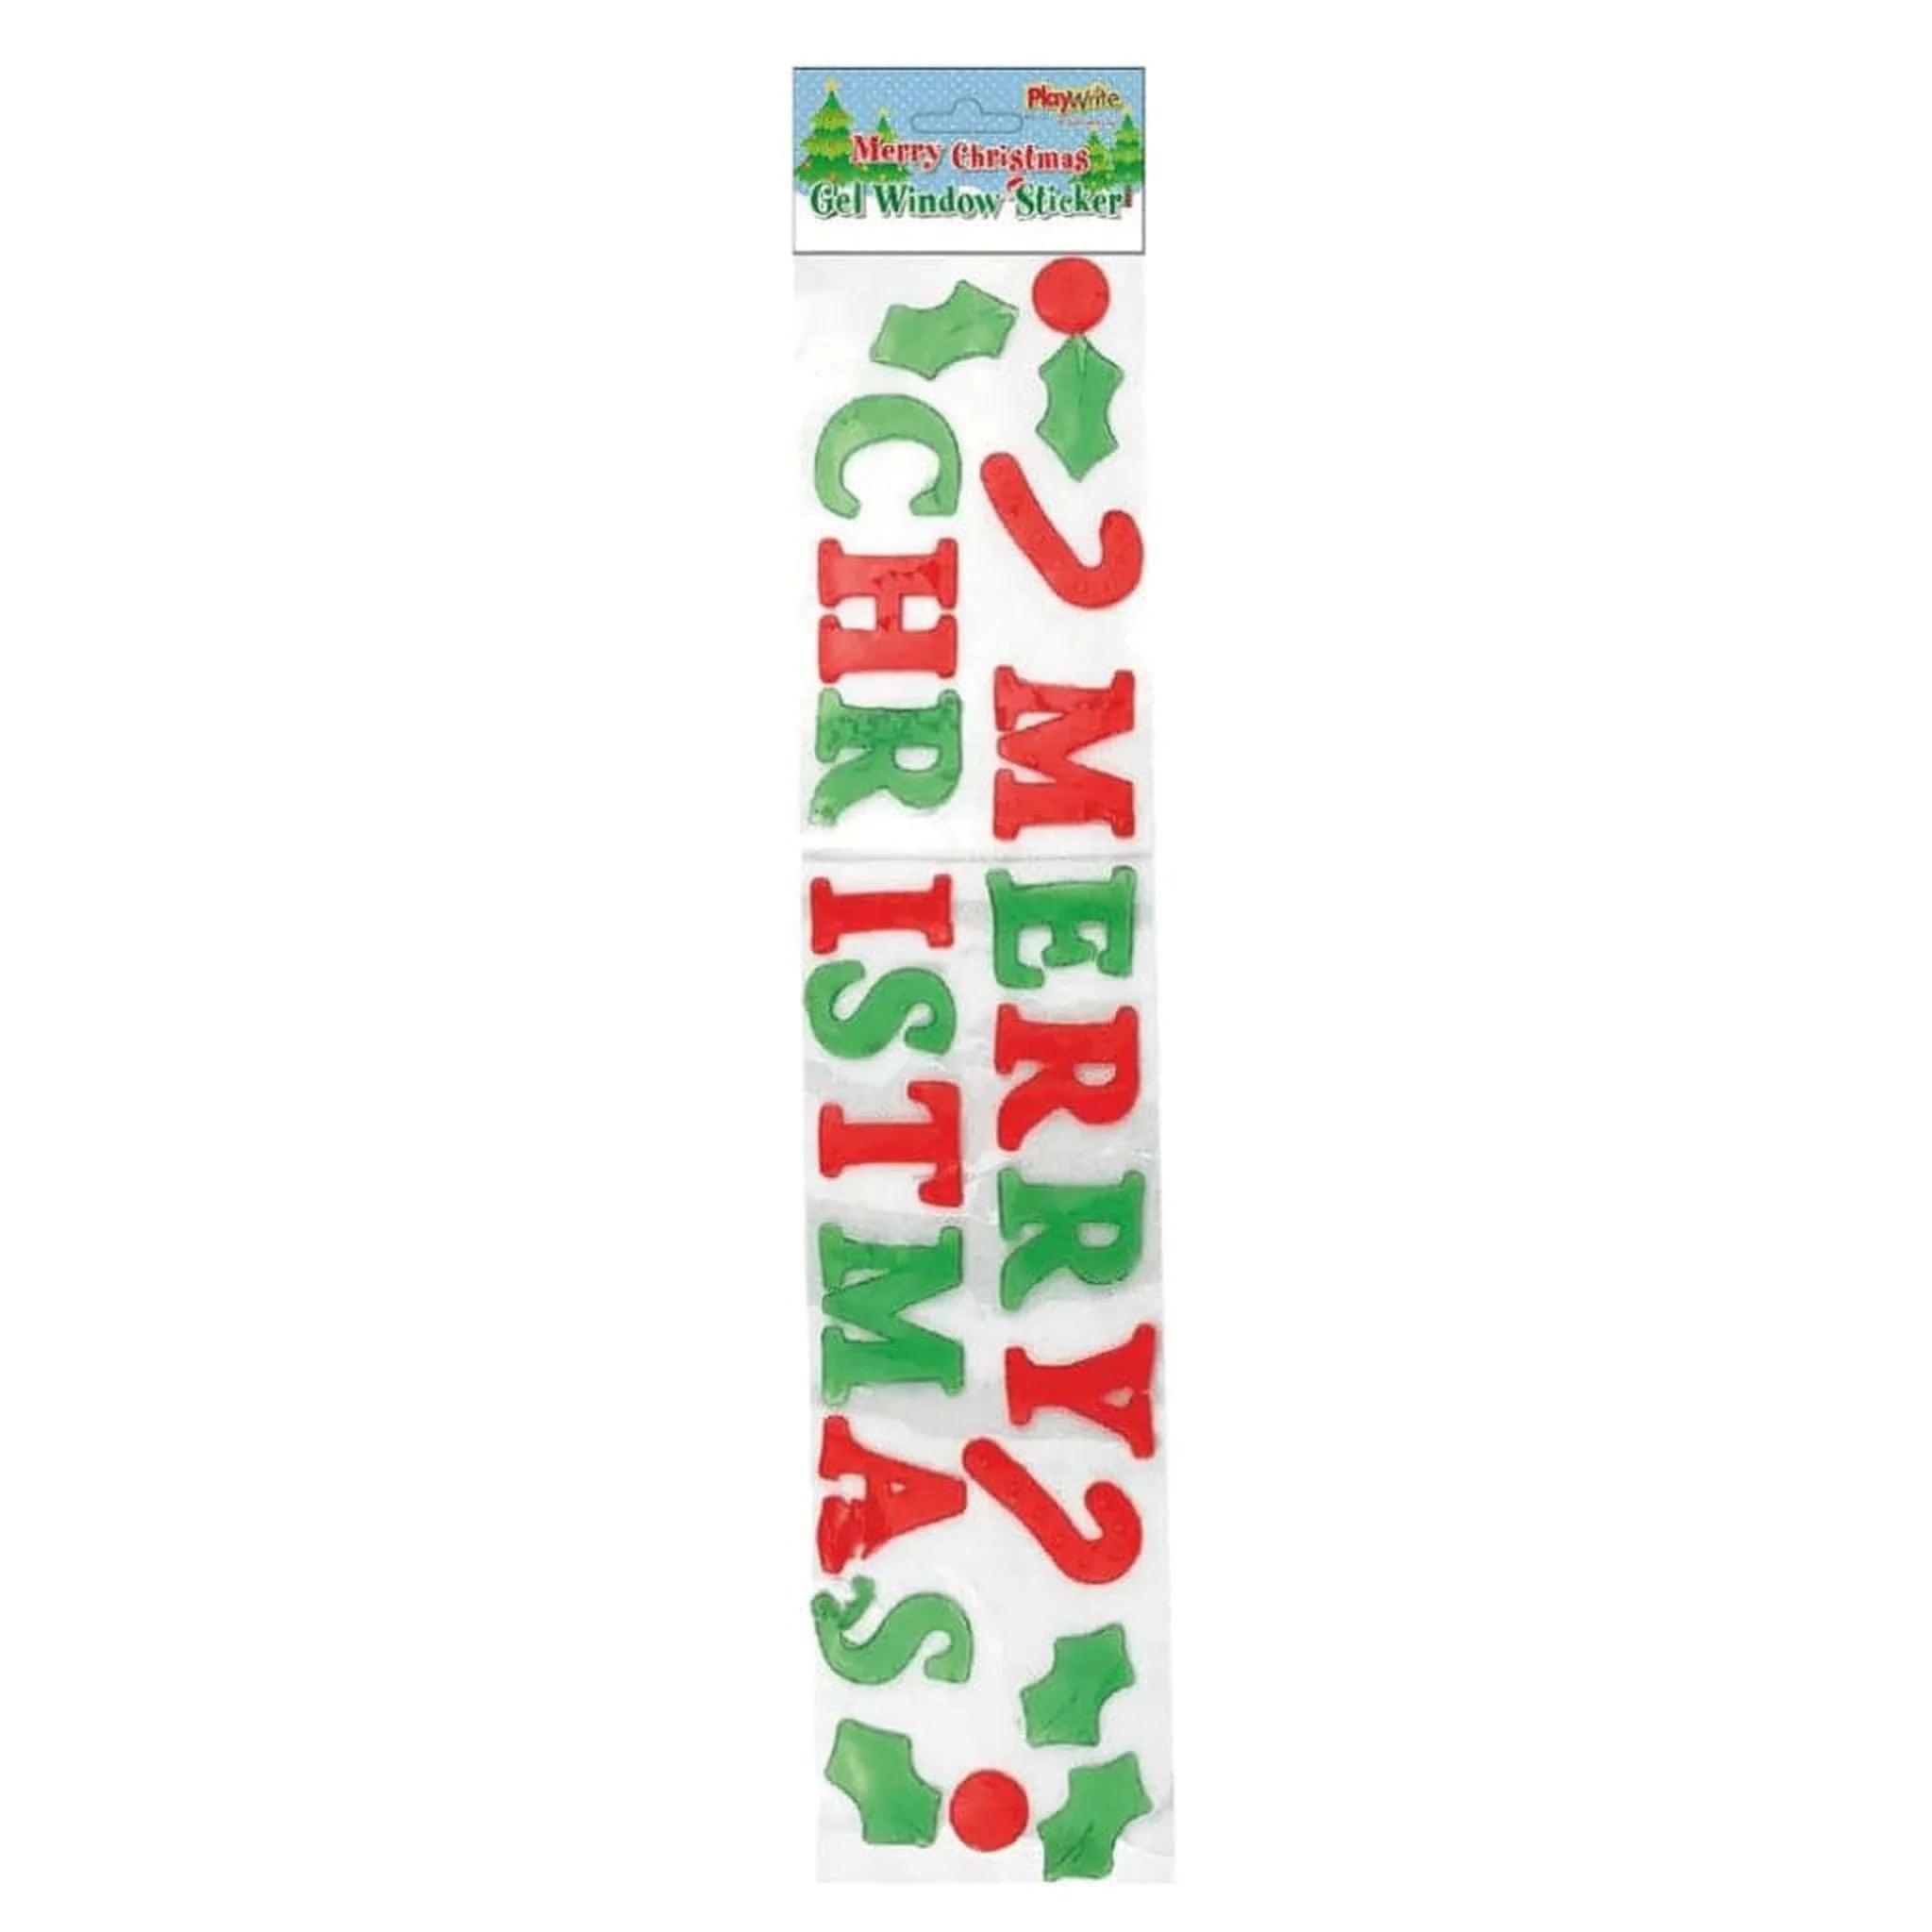 Merry Christmas Gel Window Sticker - Kids Party Craft